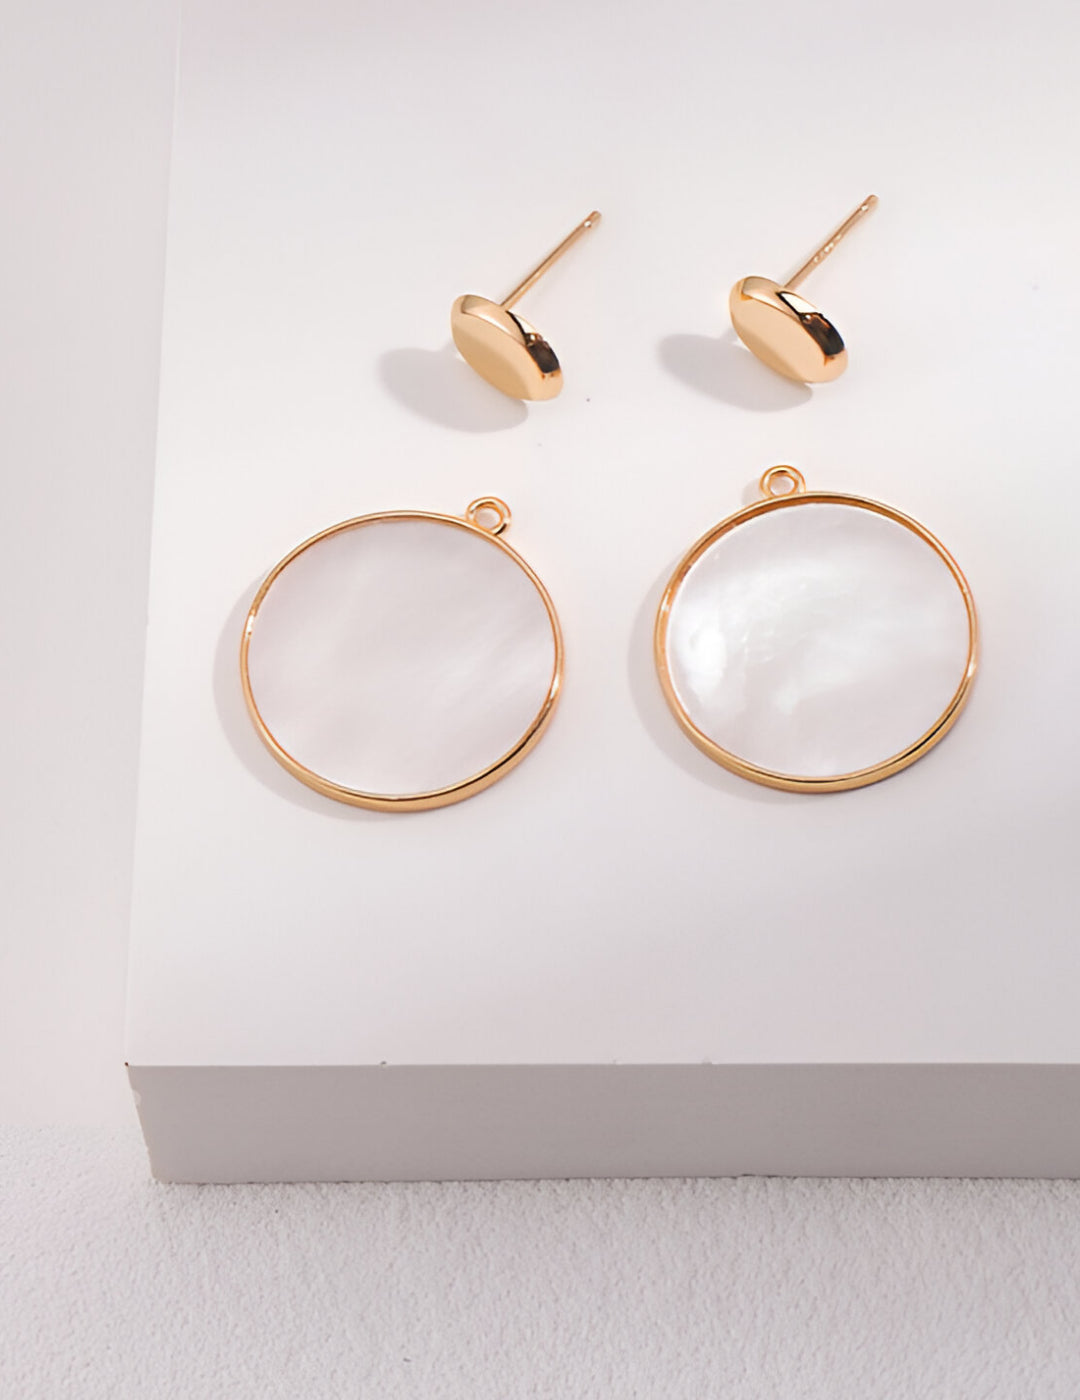 Adaptable Elegance - Stud and Earrings - S925 Sterling Silver with 18K Gold Vermeil Earrings - simple and elegant design